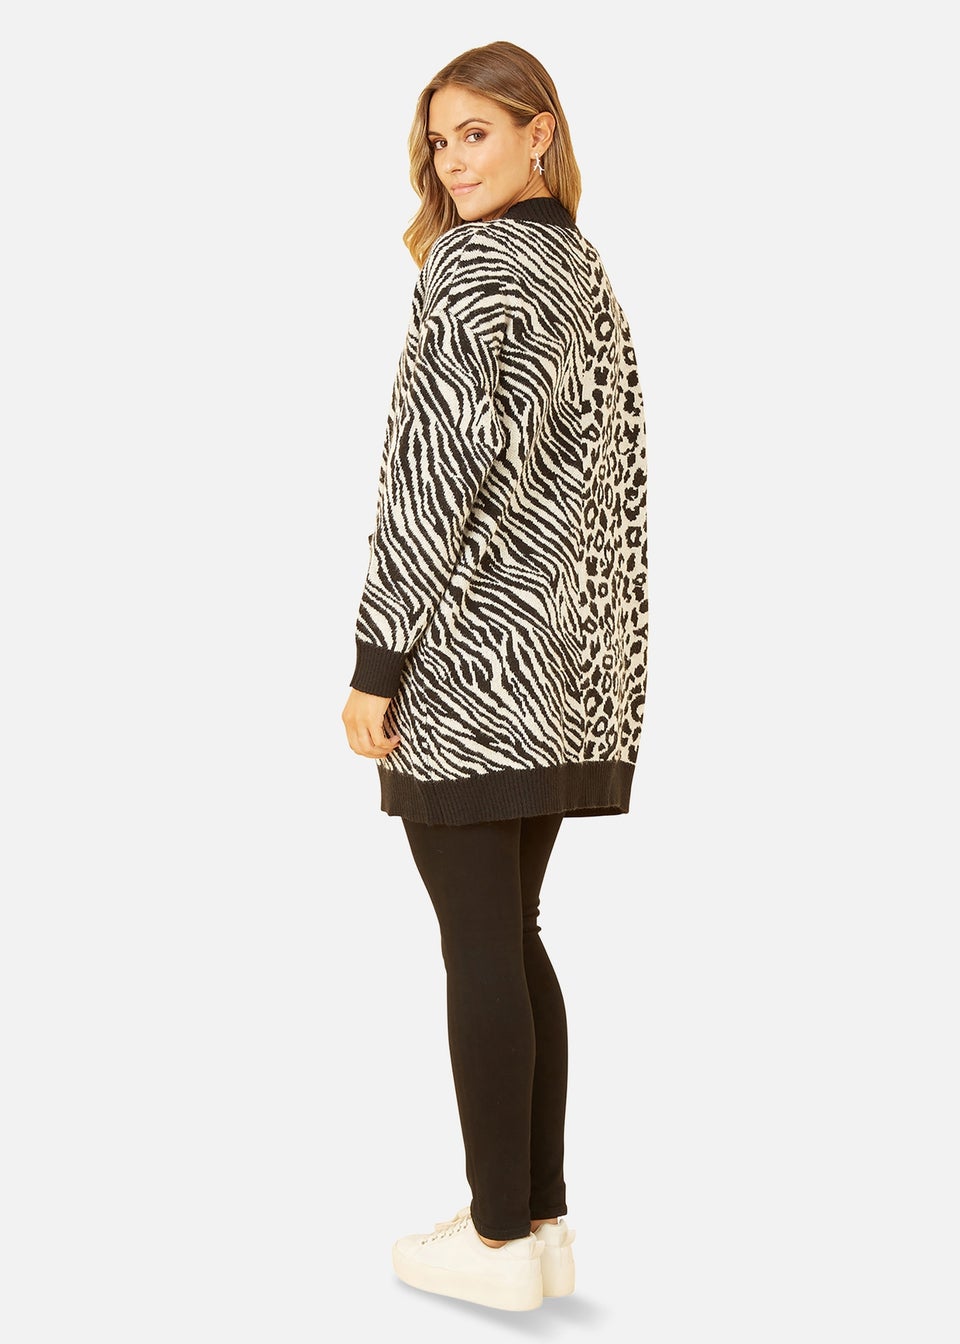 Yumi Zebra and Leopard Print Knitted Intarsia Cardigan